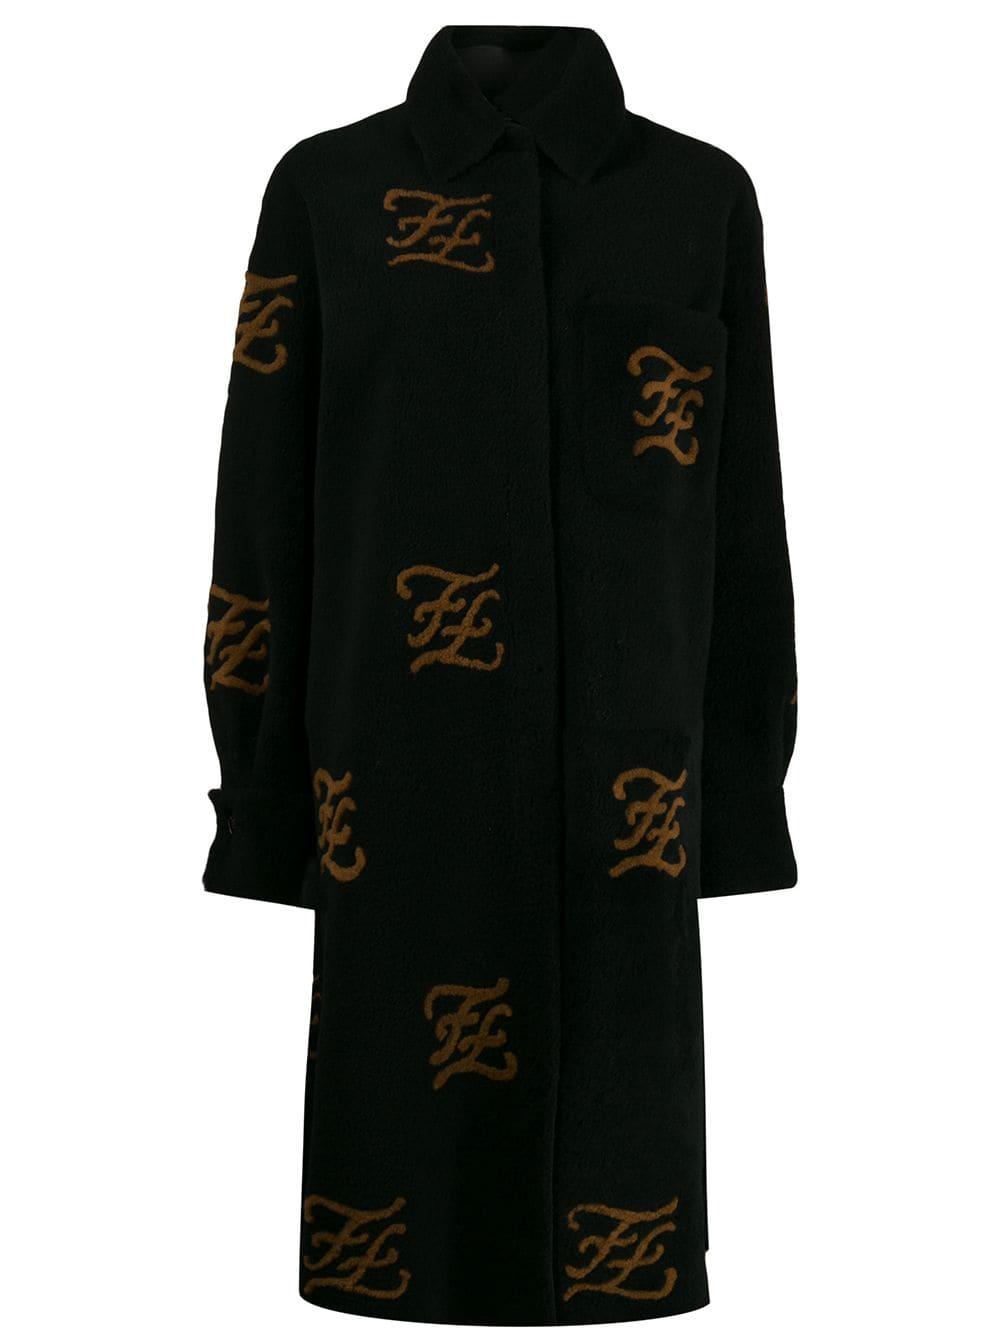 ff motif shearling jacket